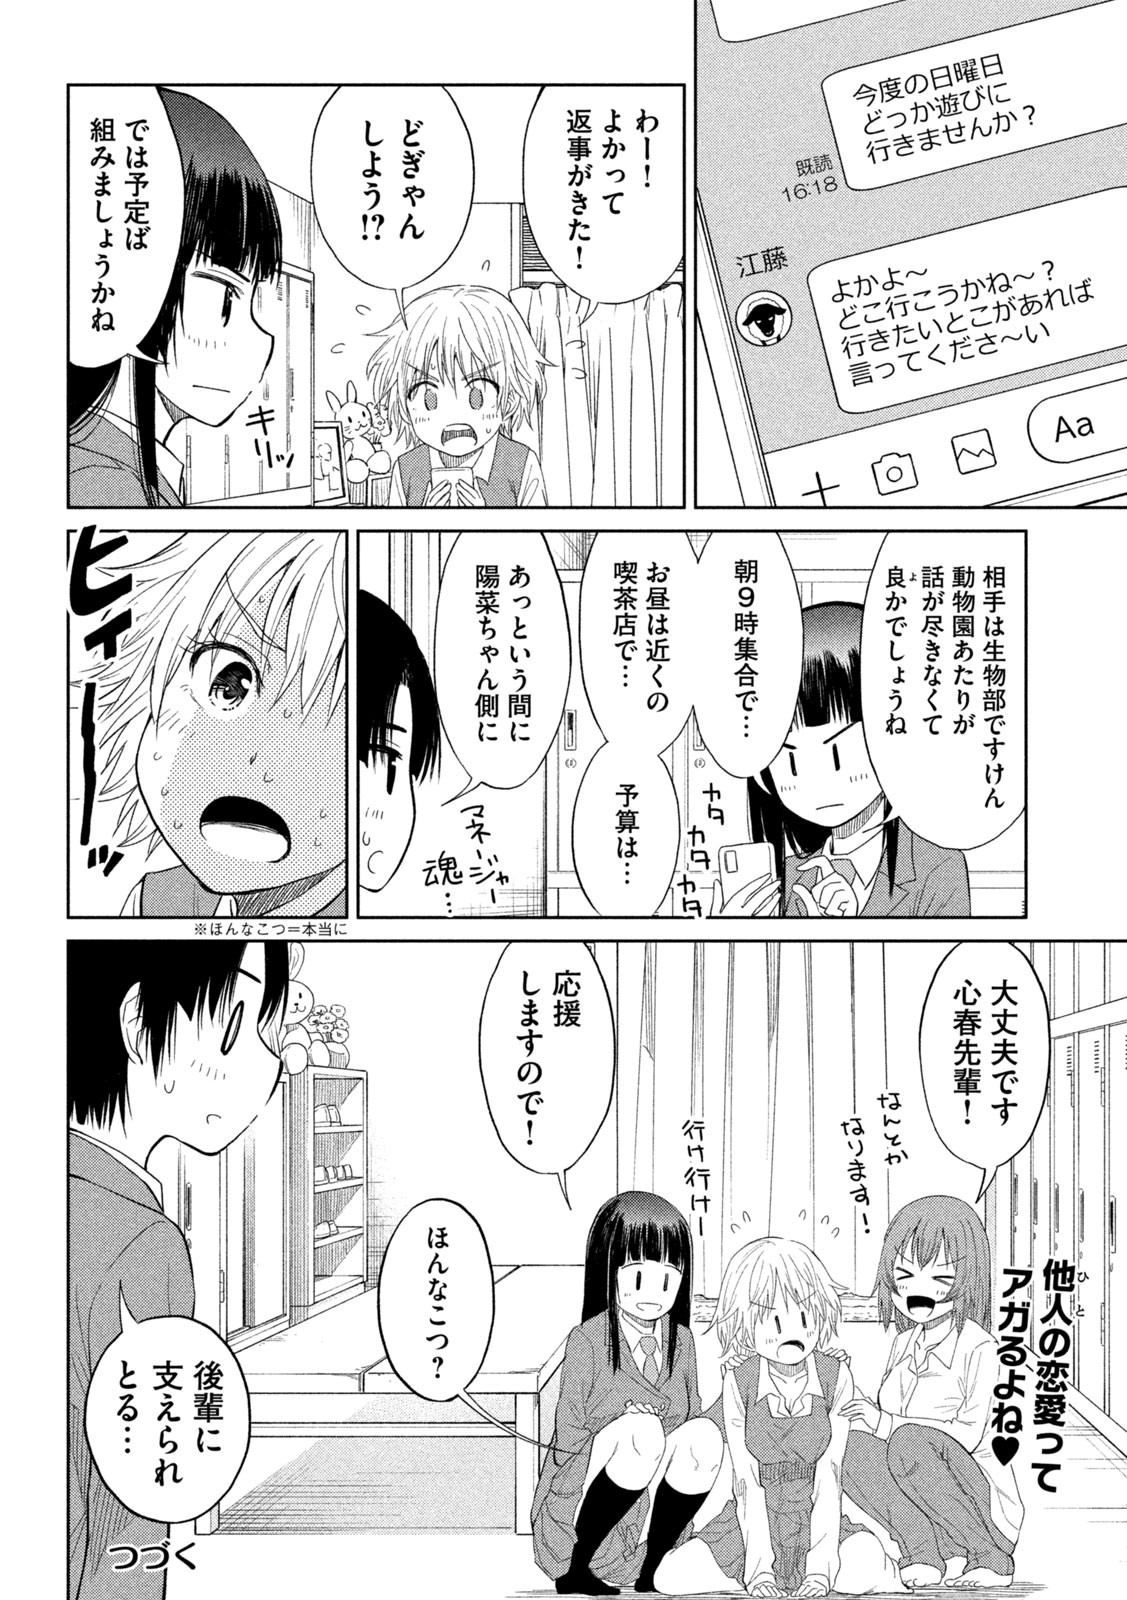 Koharu haru! - Chapter 102 - Page 4